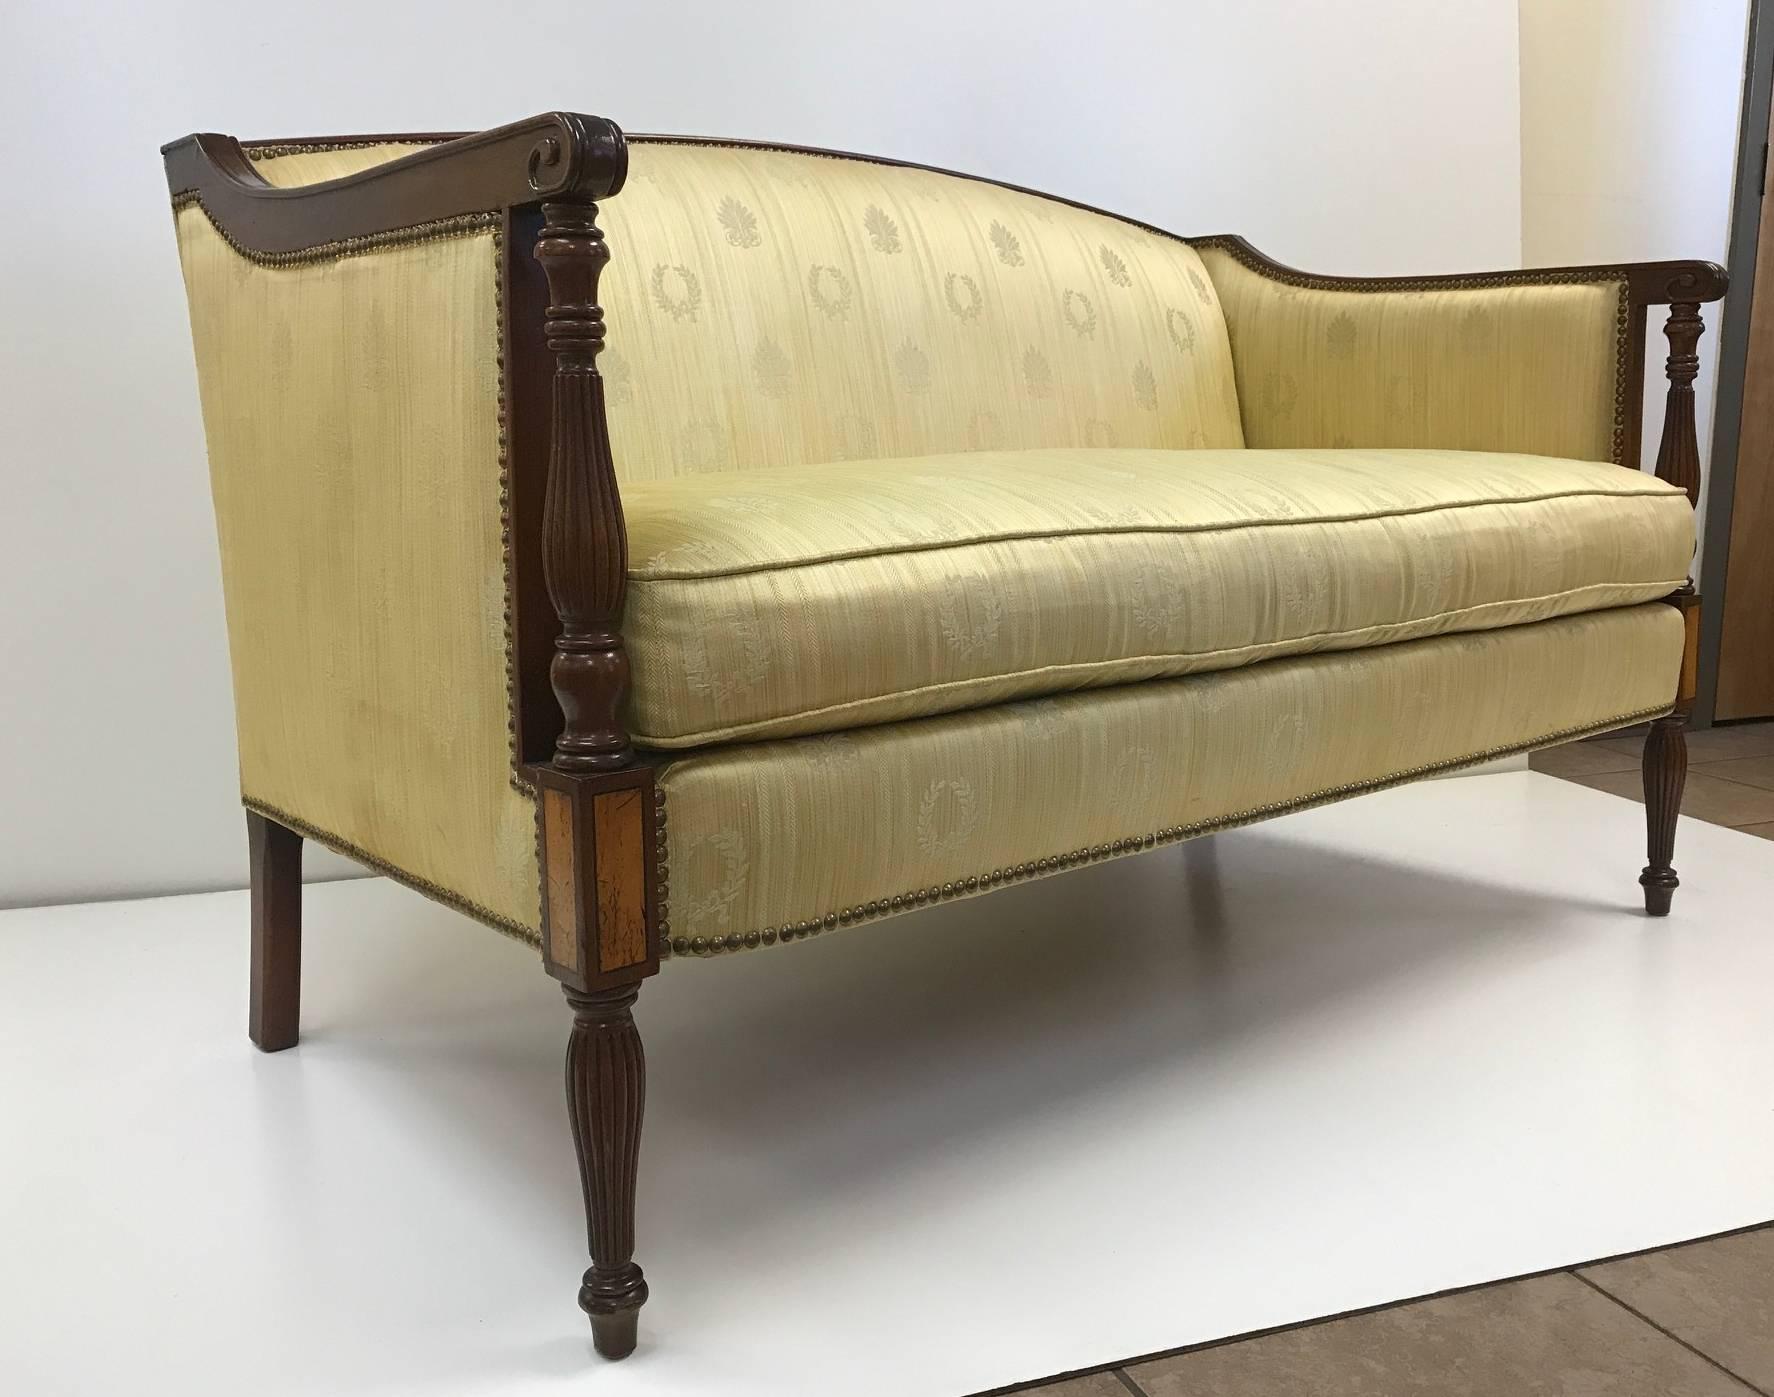 Pair of mahogany Sheraton style sofas, solid mahogany frame and original upholstery.